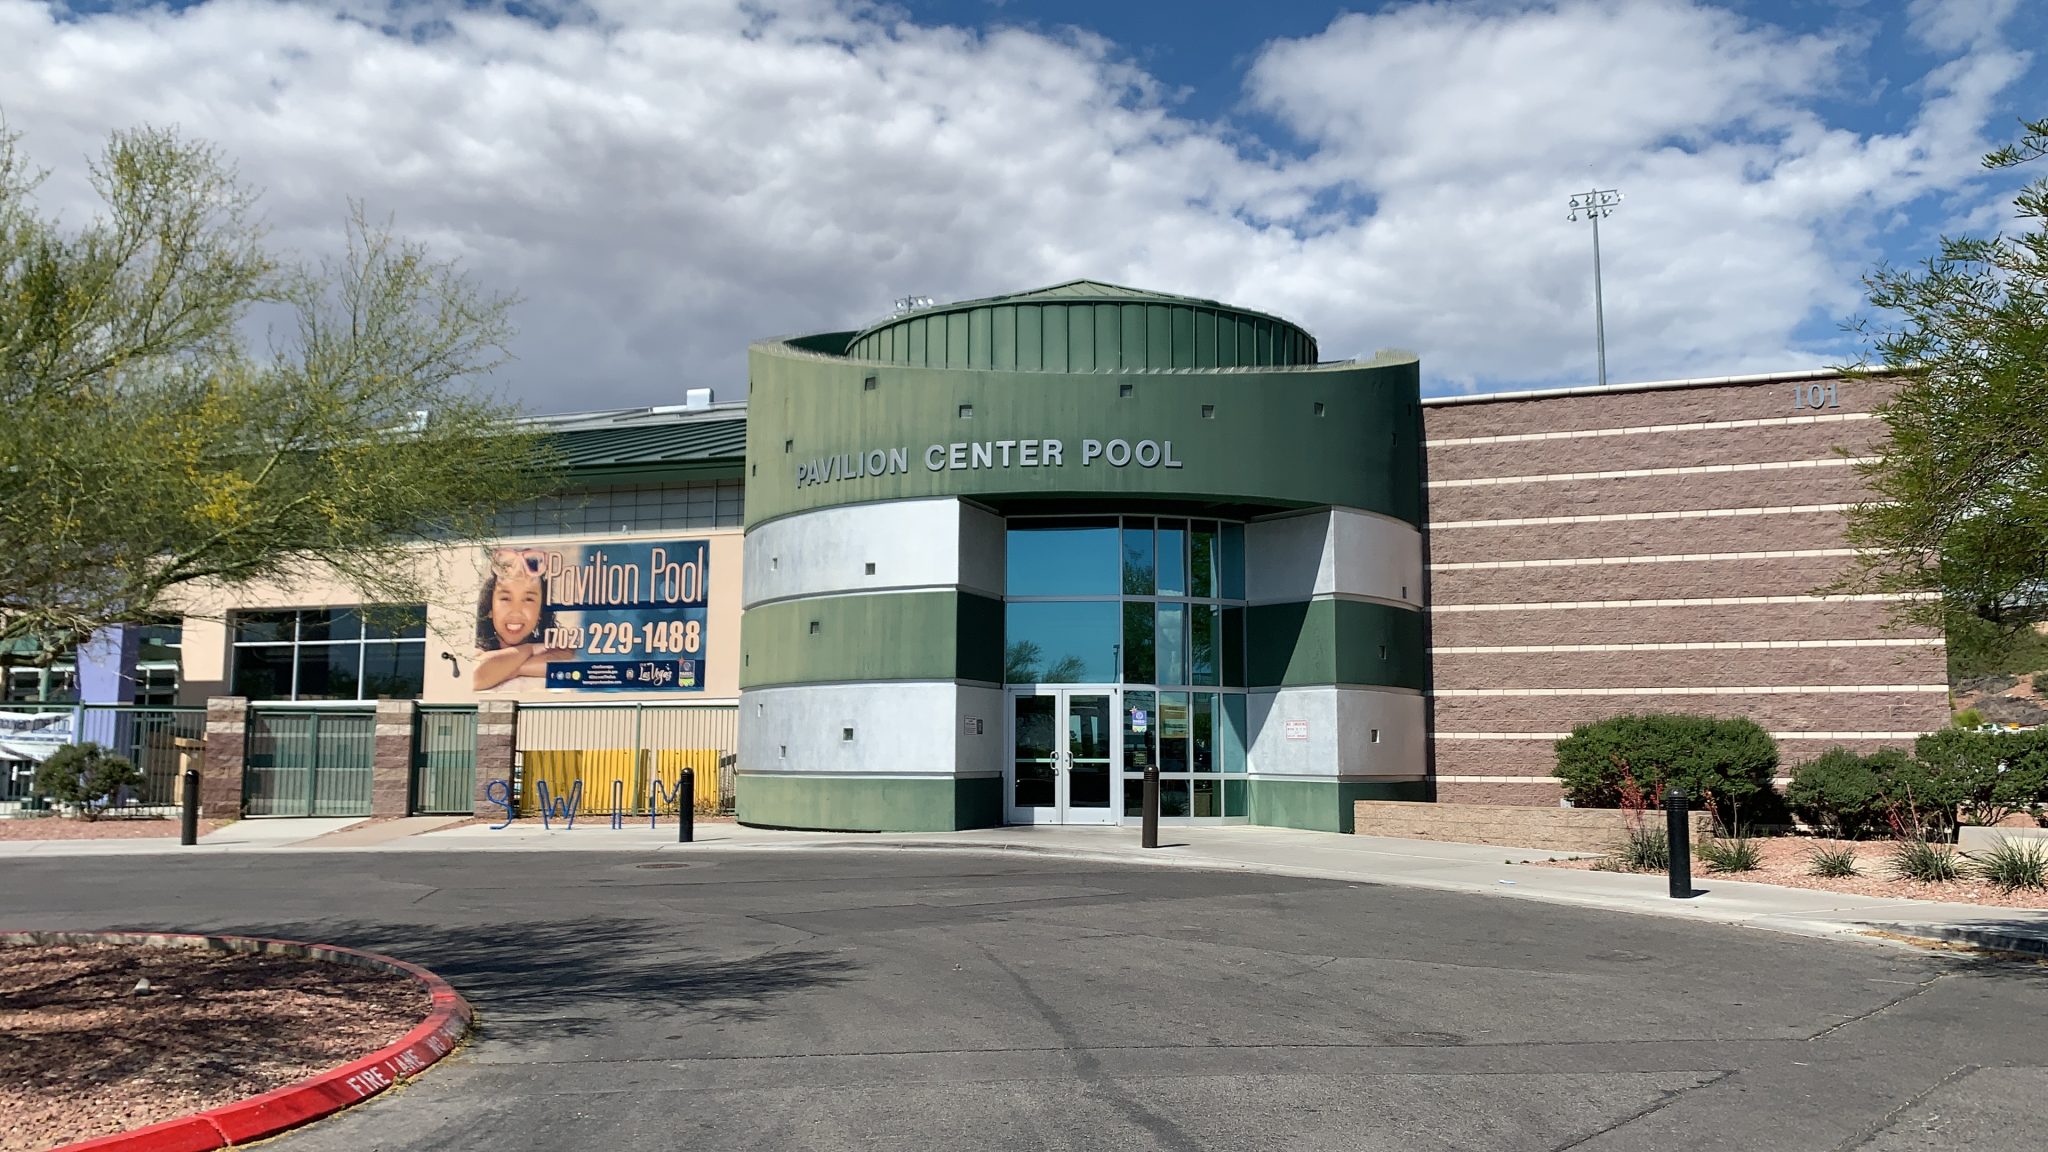 Pavilion Center Pool